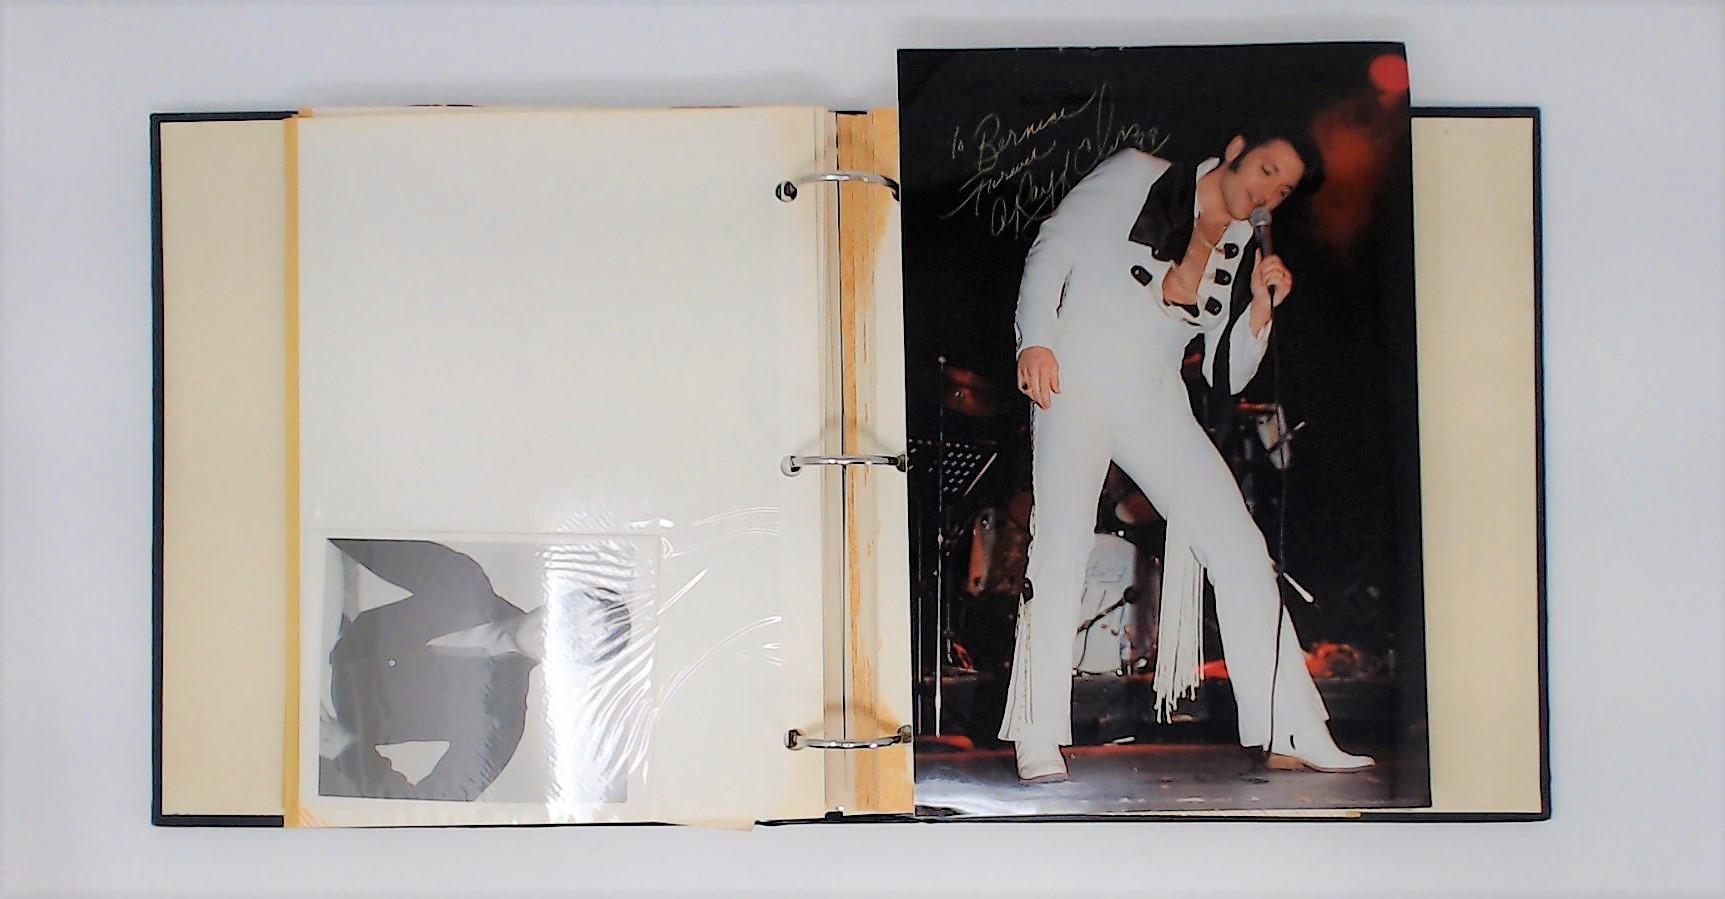 Homemade Elvis Presley Scrapbook / Photo Album